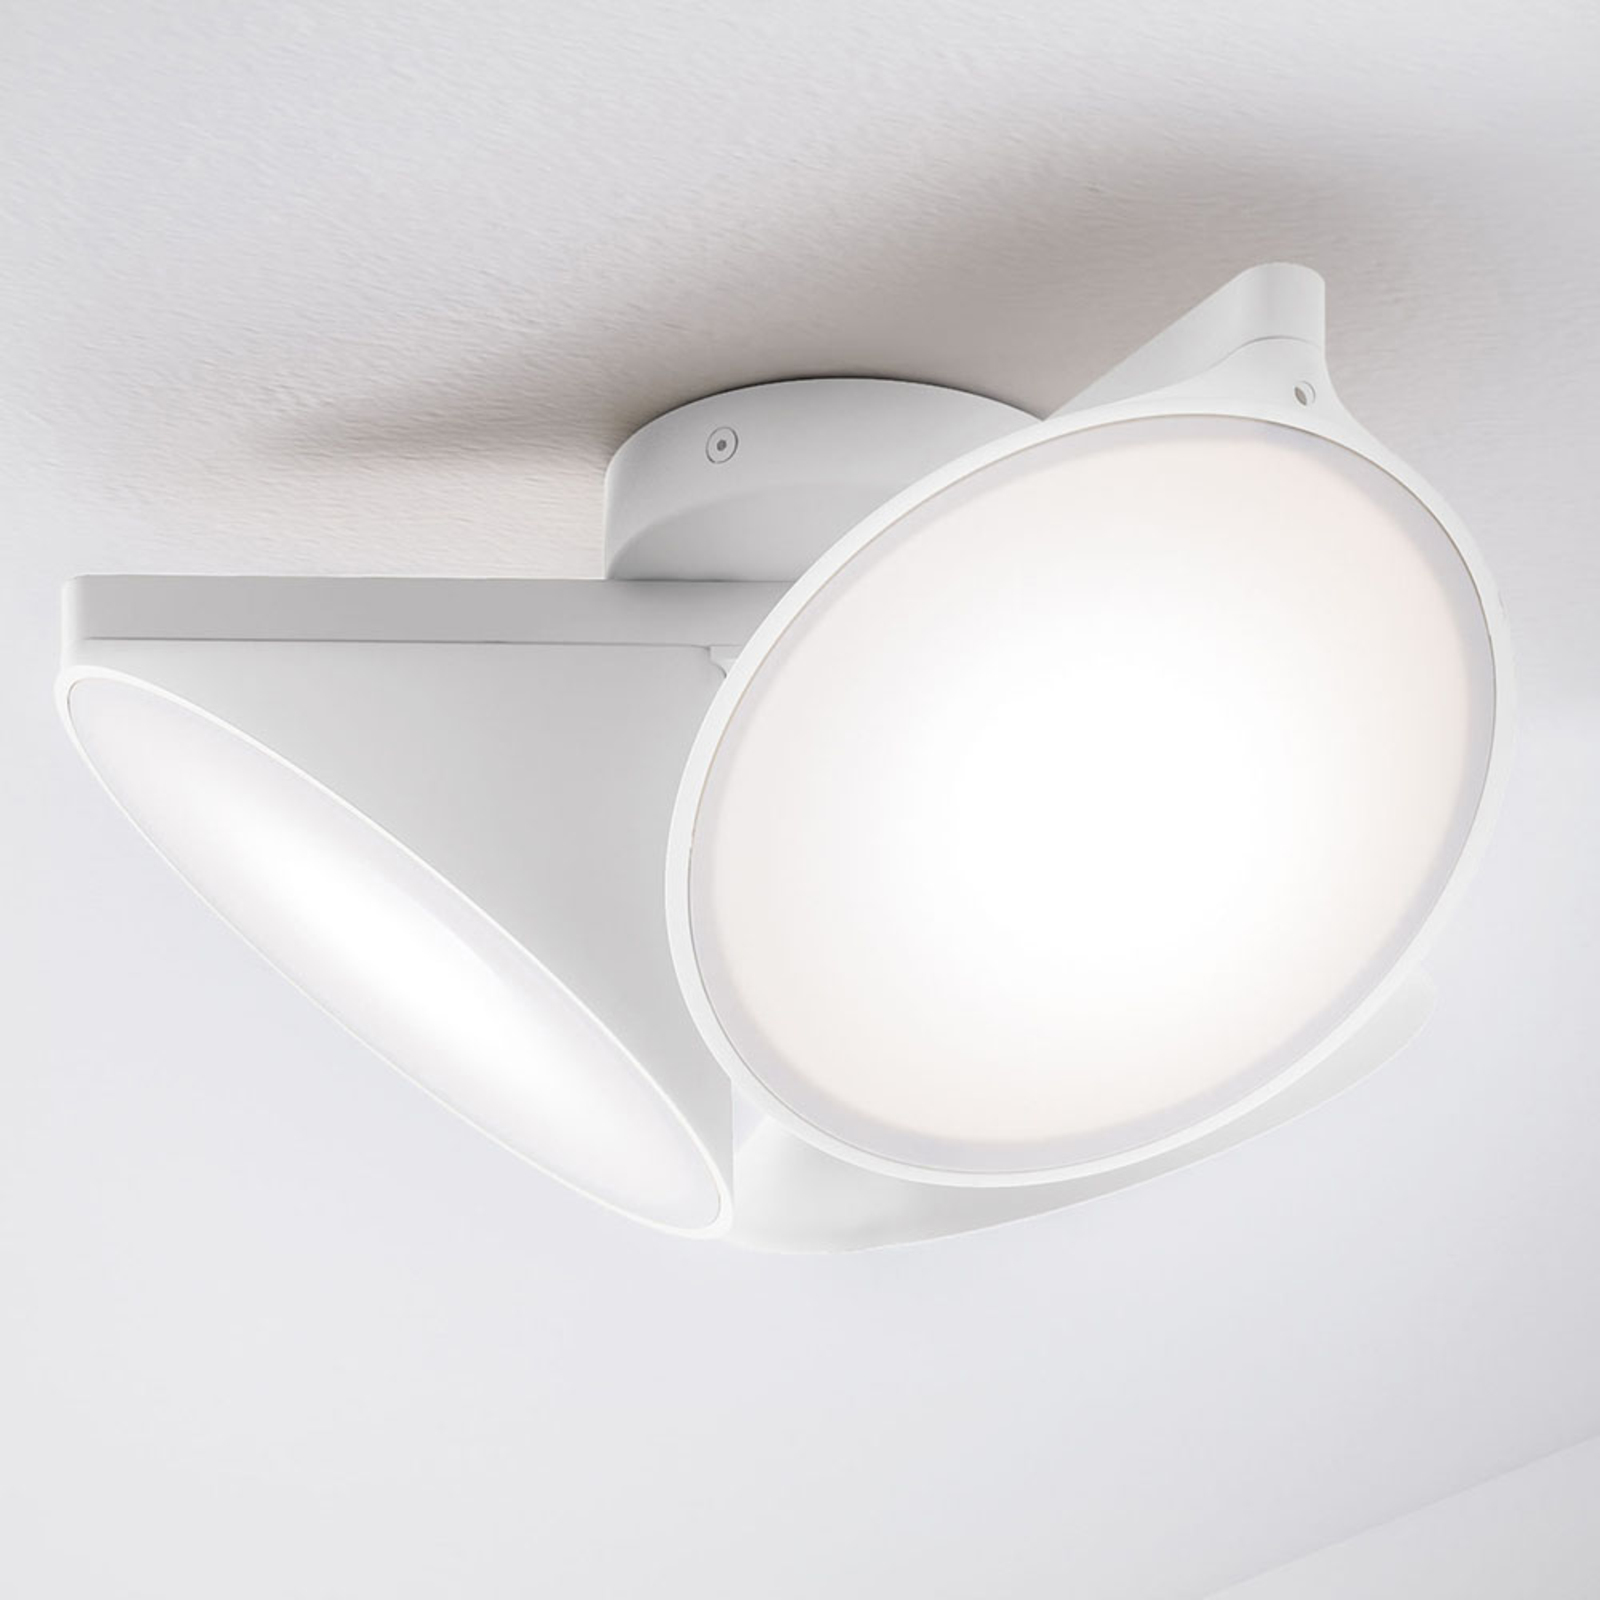 Axolight Orchid LED ceiling light, white